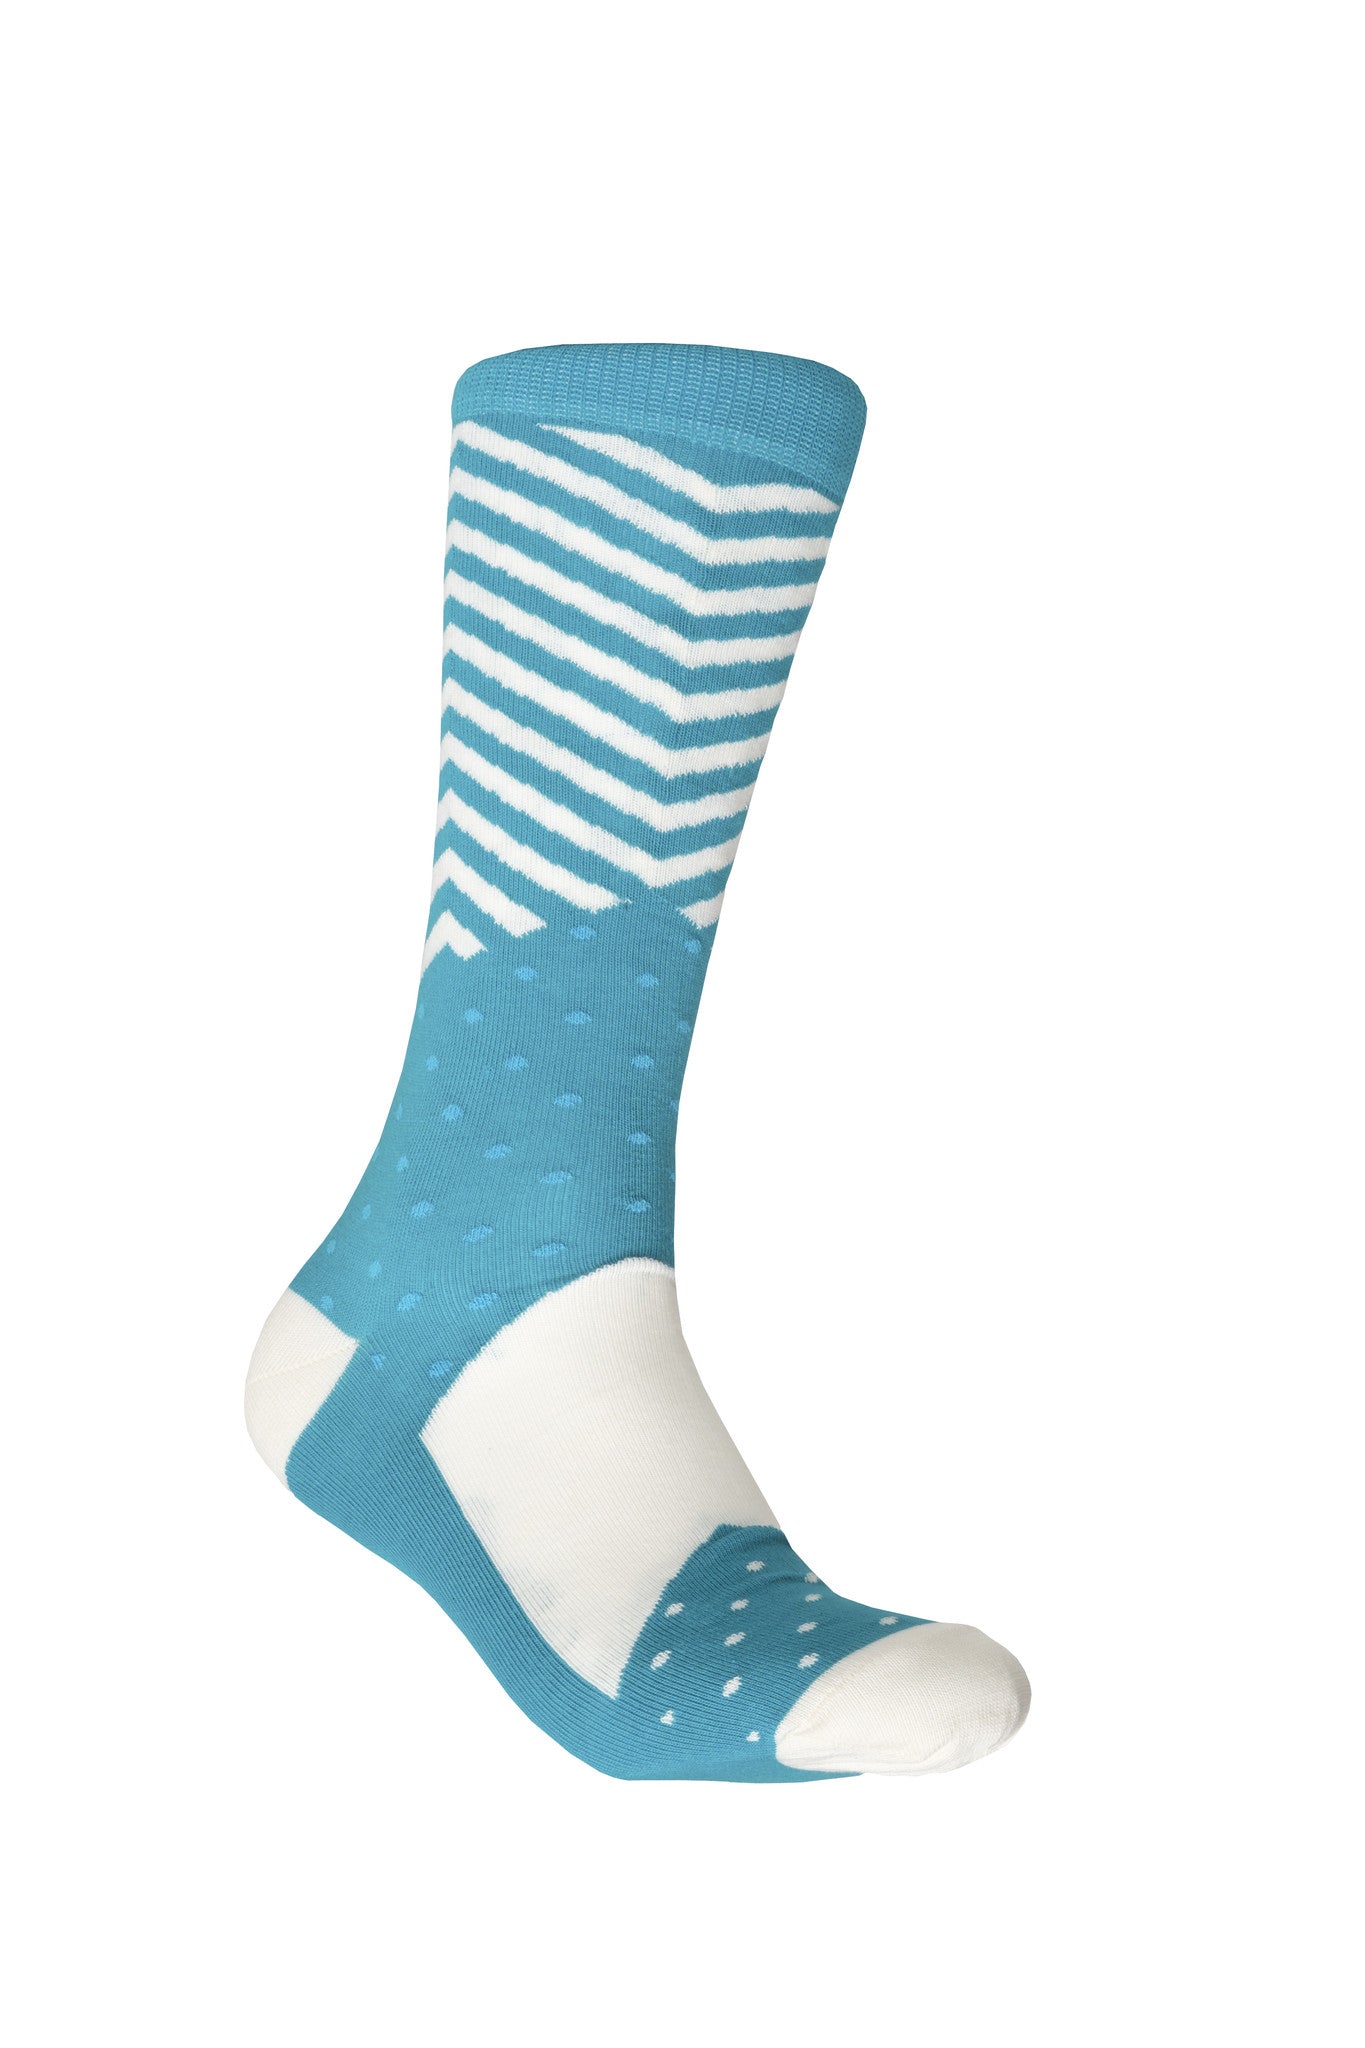 Giraffecool-Giraffe-Cool-Brand-Aquamarine-Blue-Dots-And-Diagonal-White-Stripes-Cotton-Fashion-Socks-Back